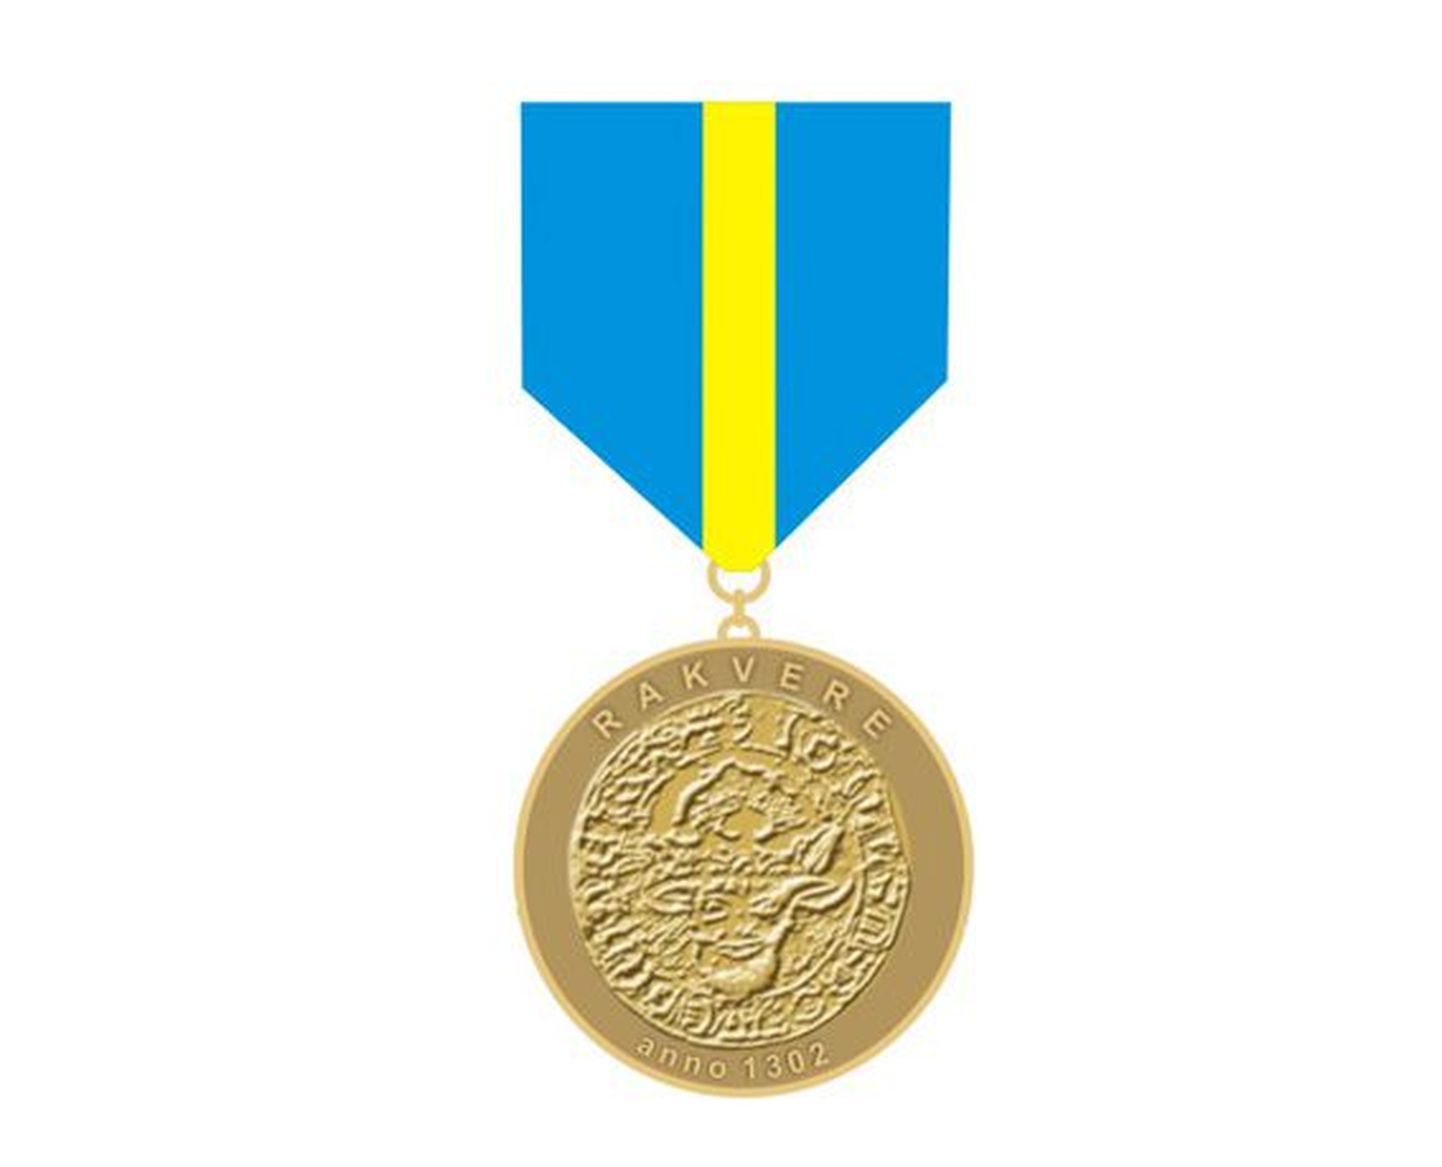 Vallimäe medal.